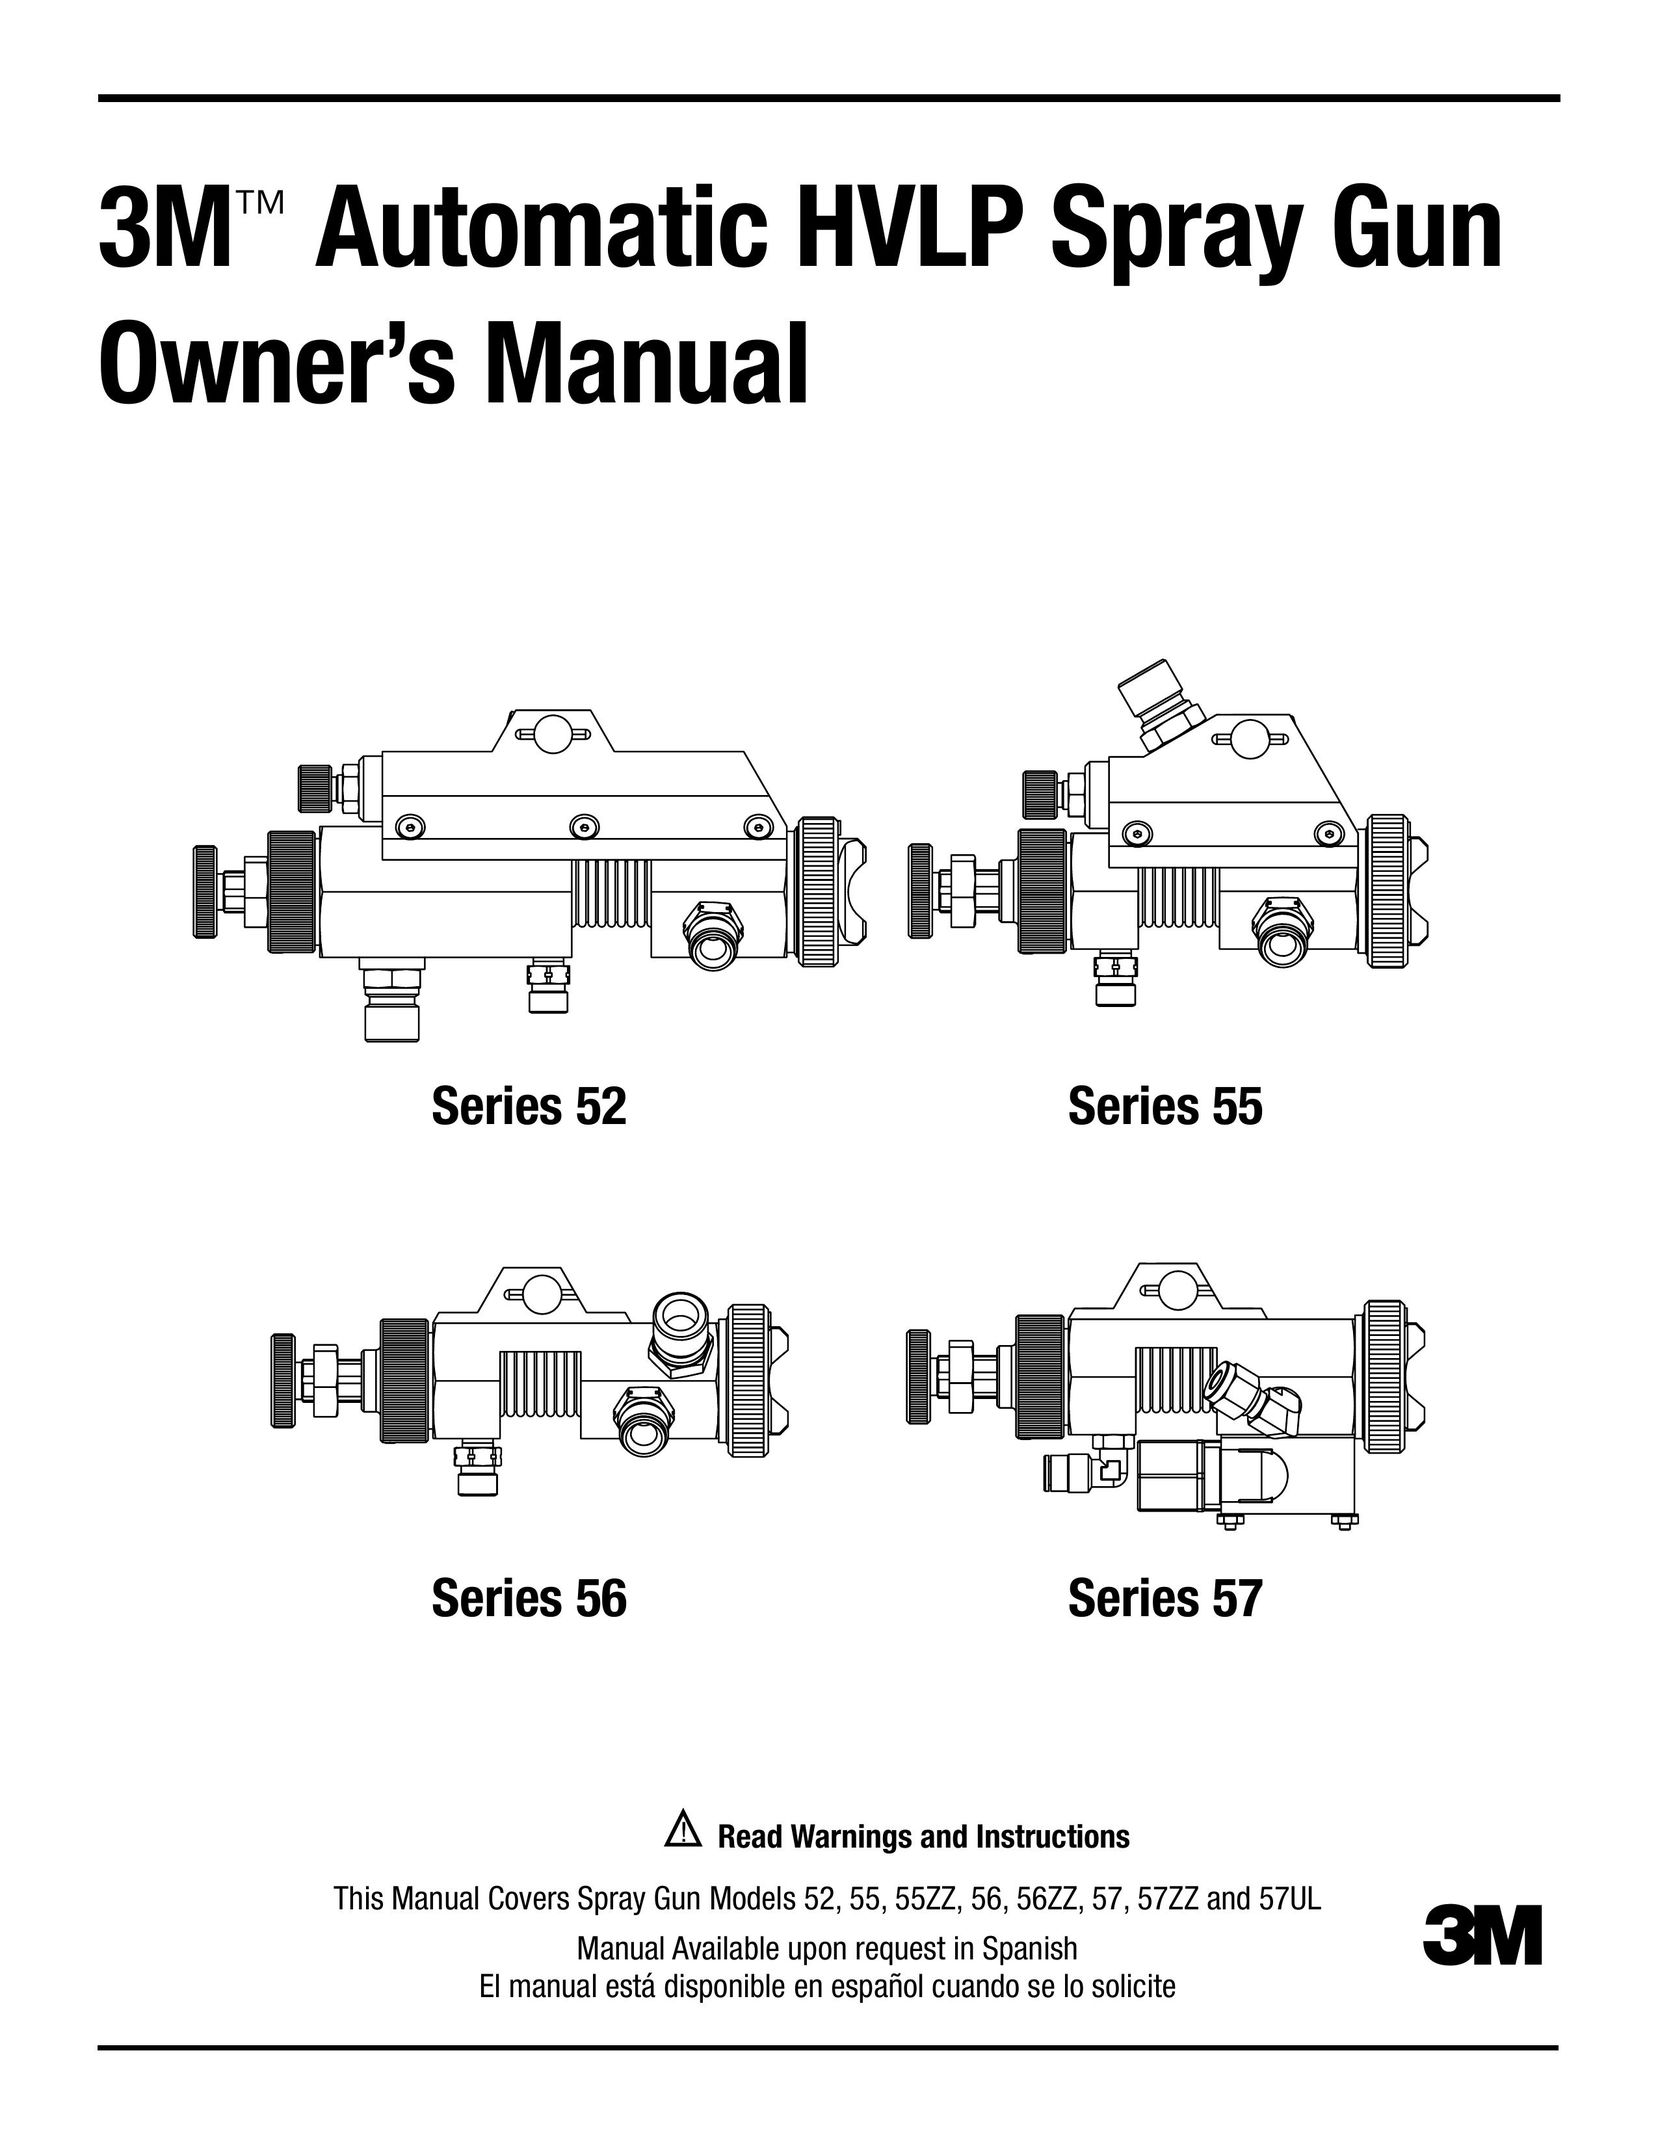 3M Series 57UL Paint Sprayer User Manual